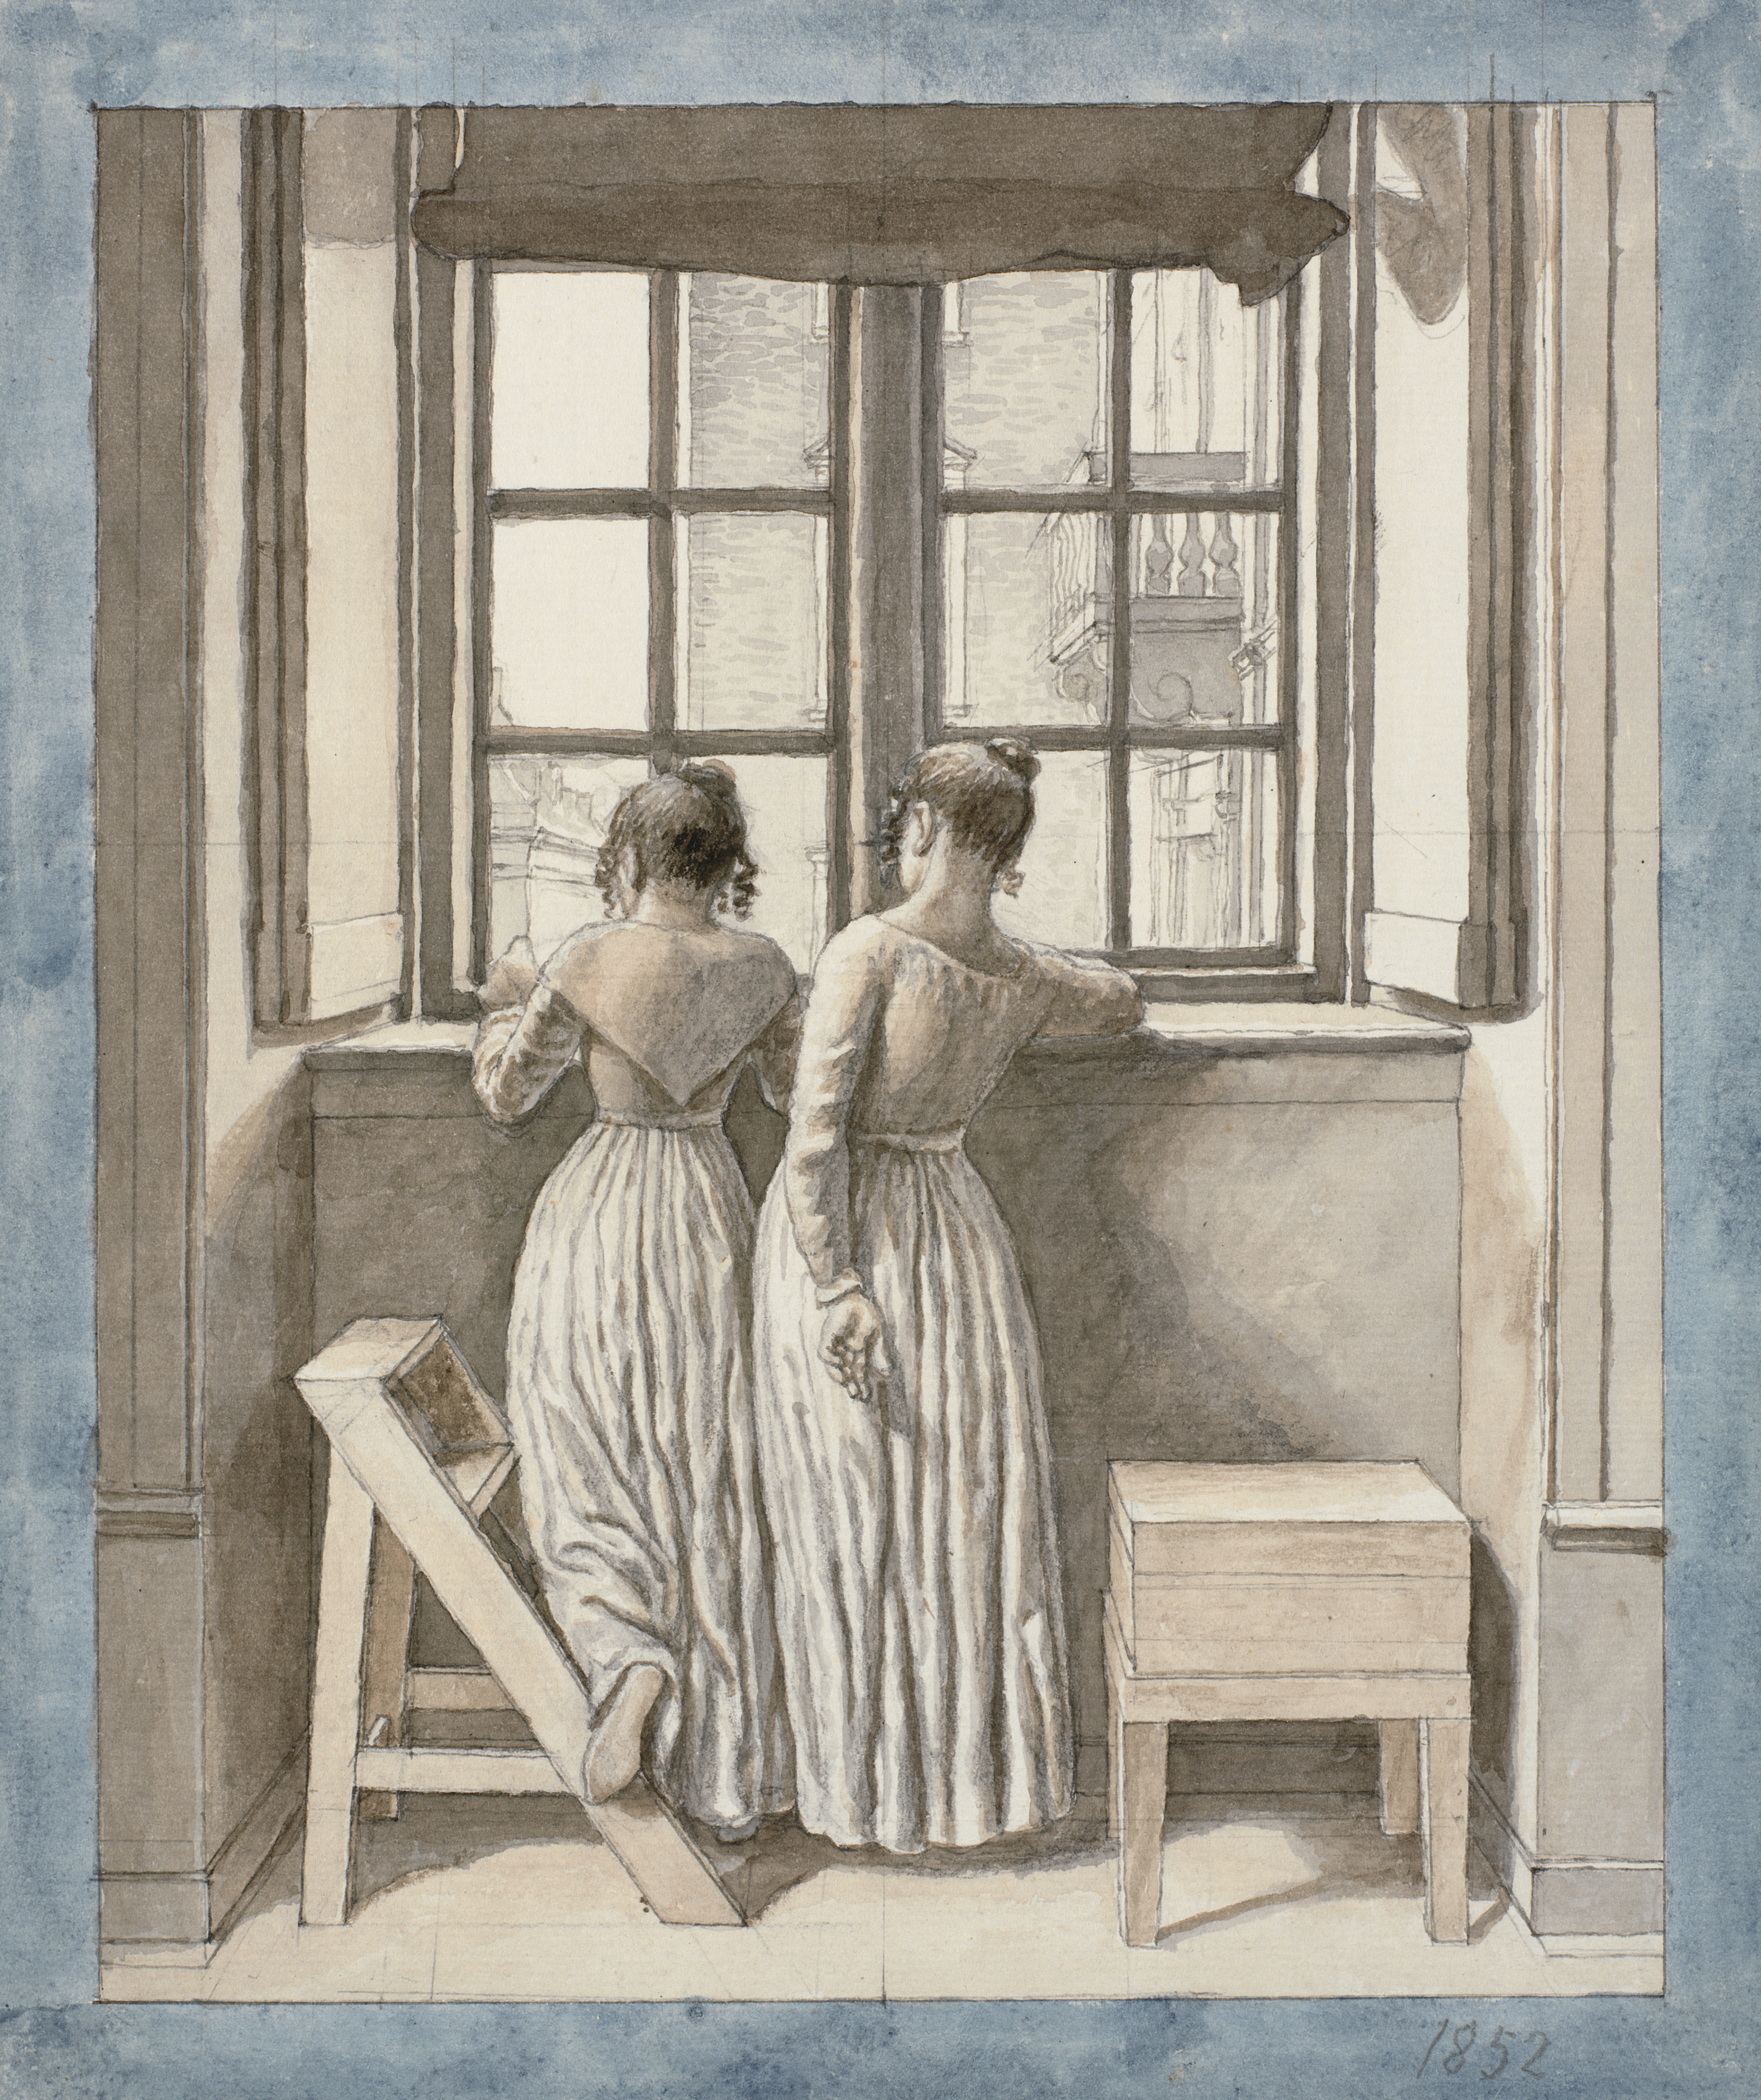 کنار پنجره ی استودیوی نقاش by C.W. Eckersberg - 1852 - 274 x 231 mm 